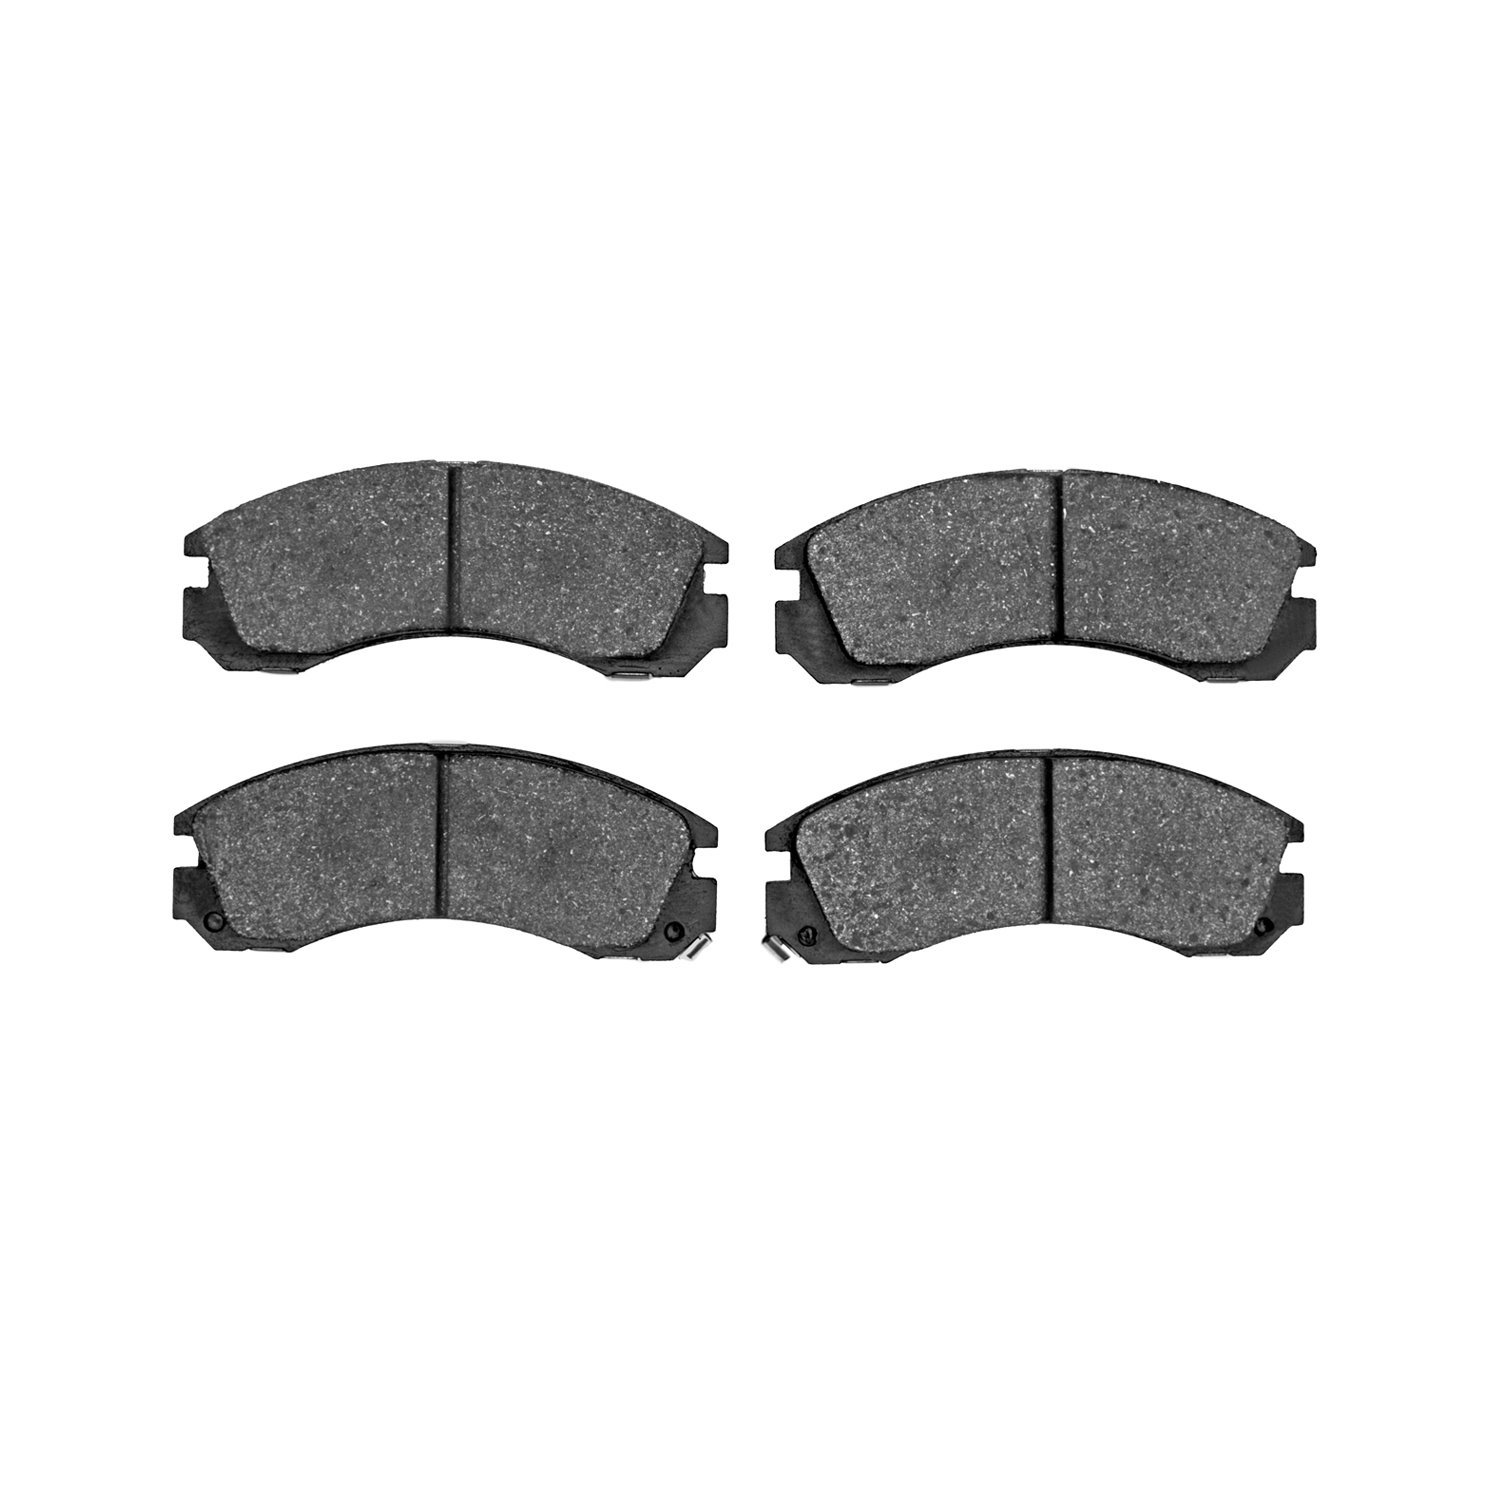 1551-0530-00 5000 Advanced Ceramic Brake Pads, Fits Select Multiple Makes/Models, Position: Front